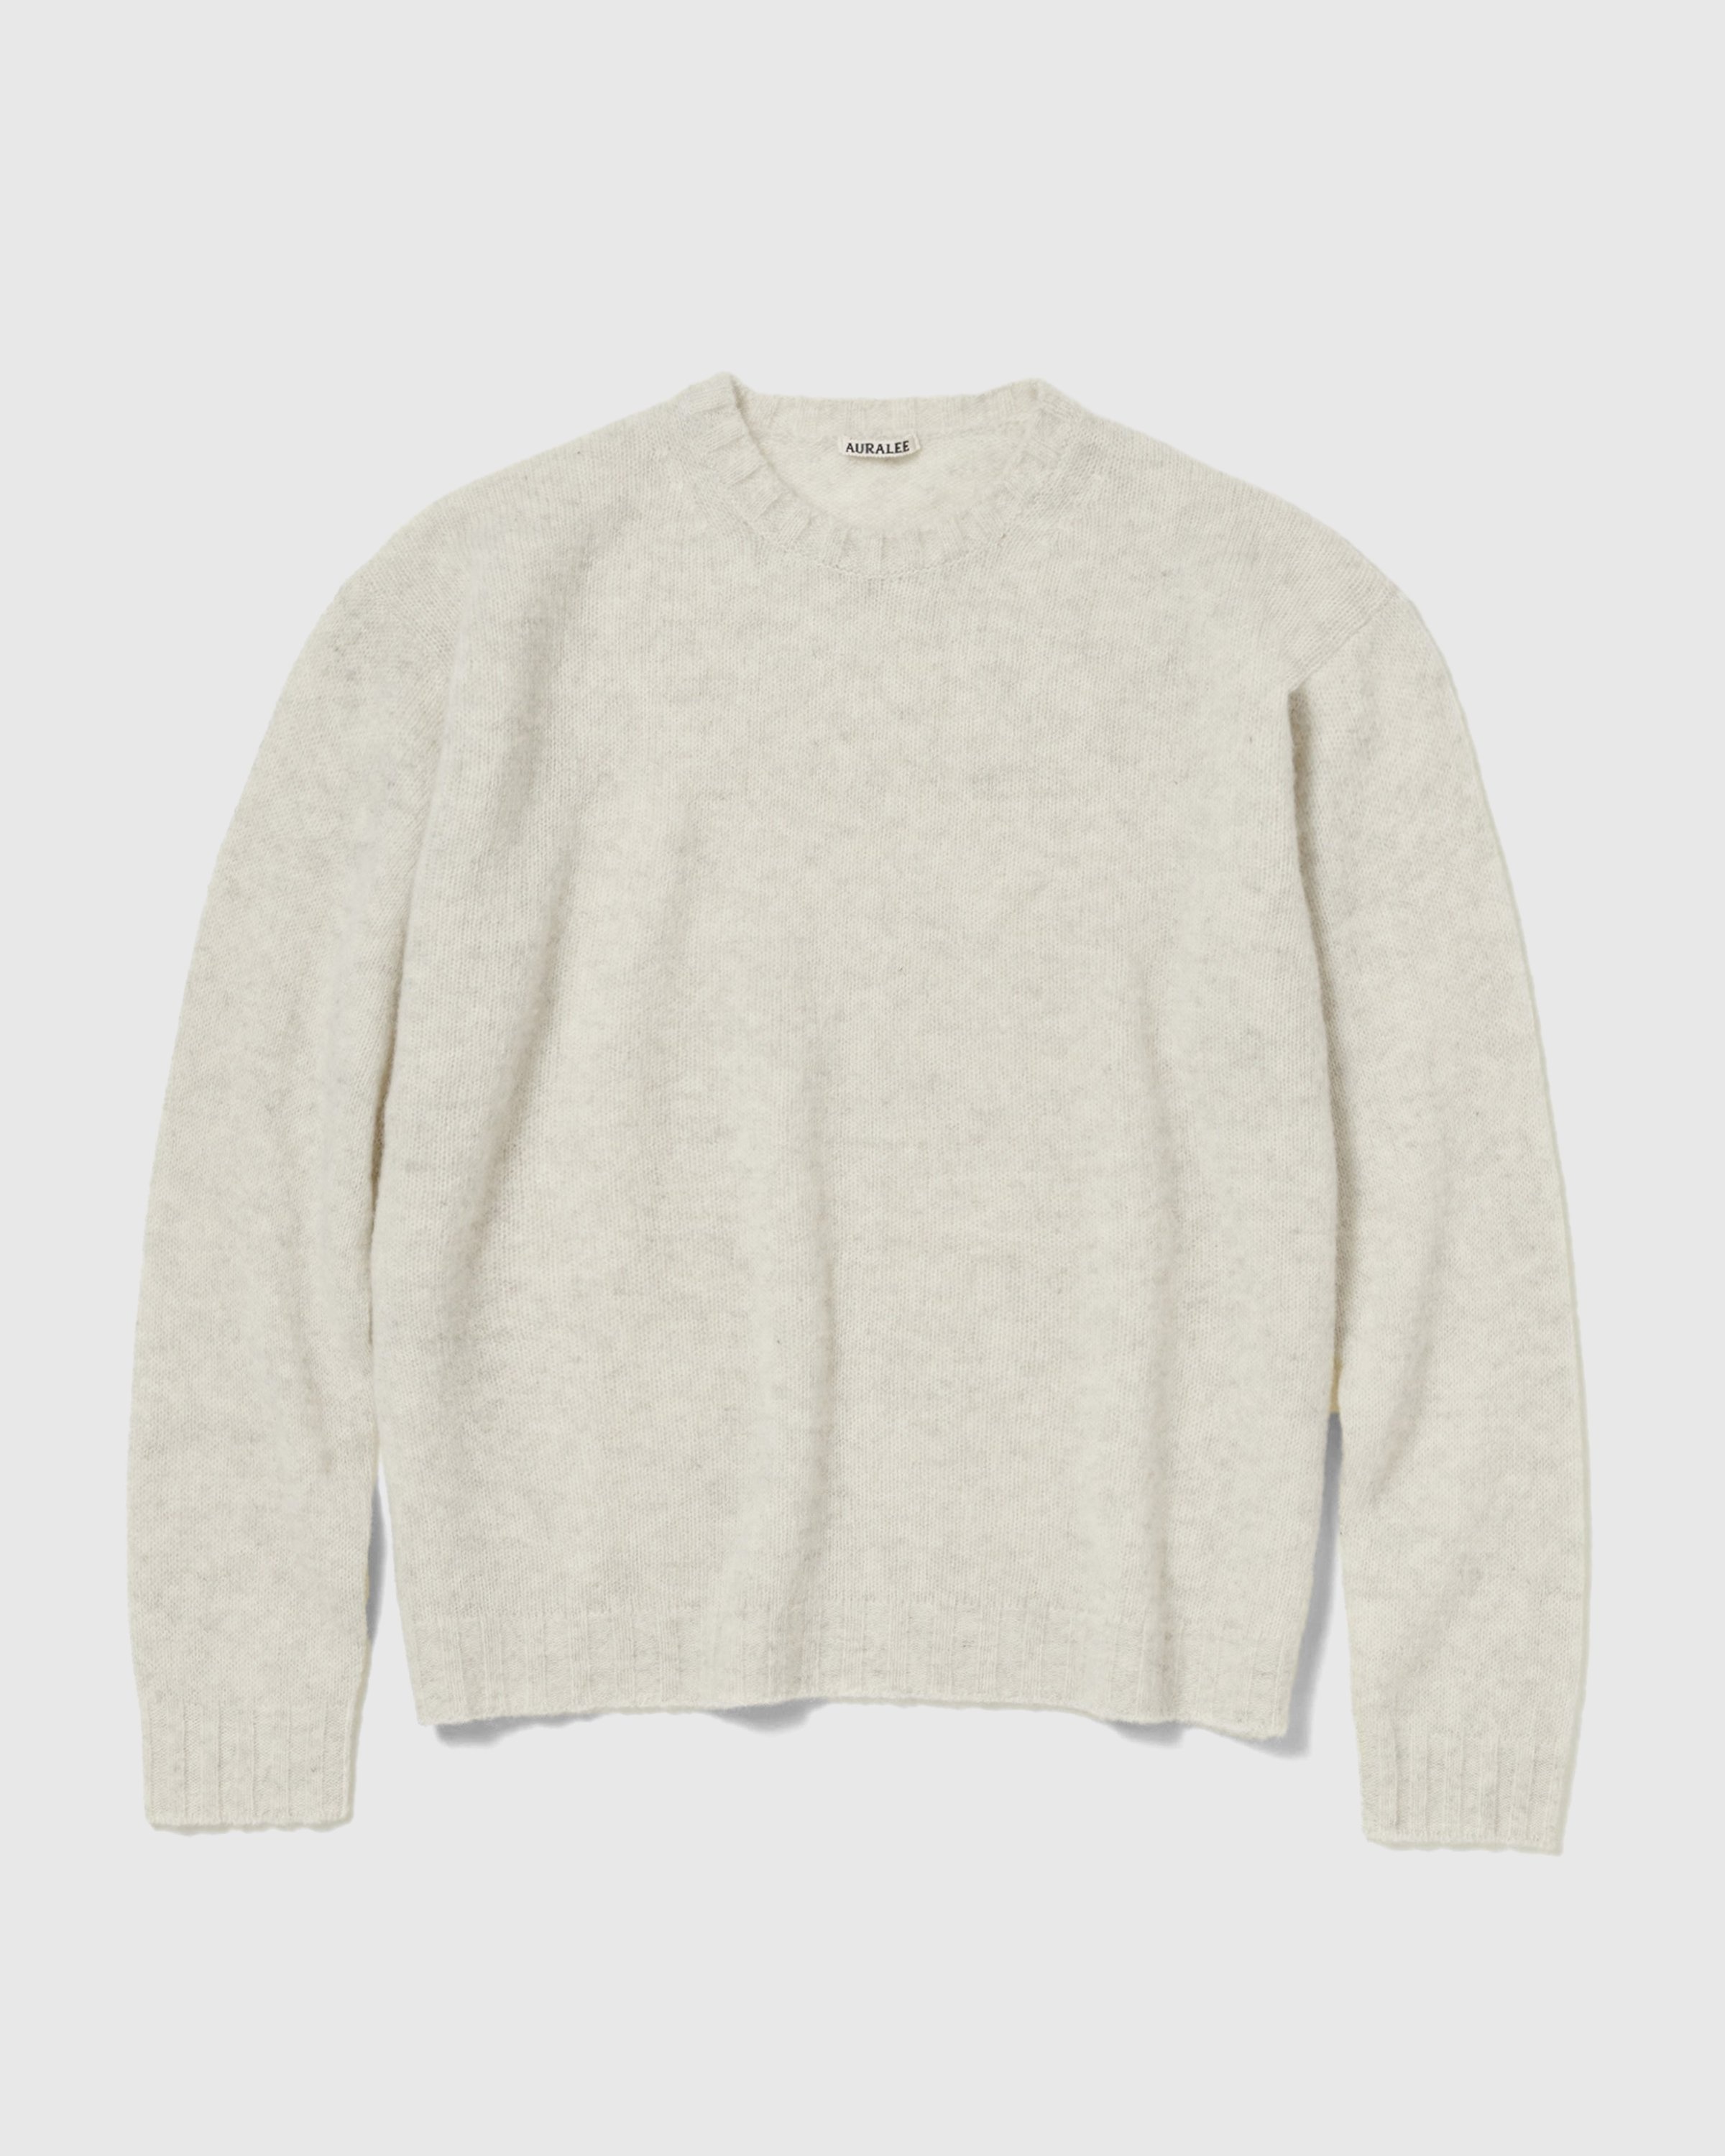 Auralee – Shetland Wool Cashmere Knit - Knitwear - White - Image 1